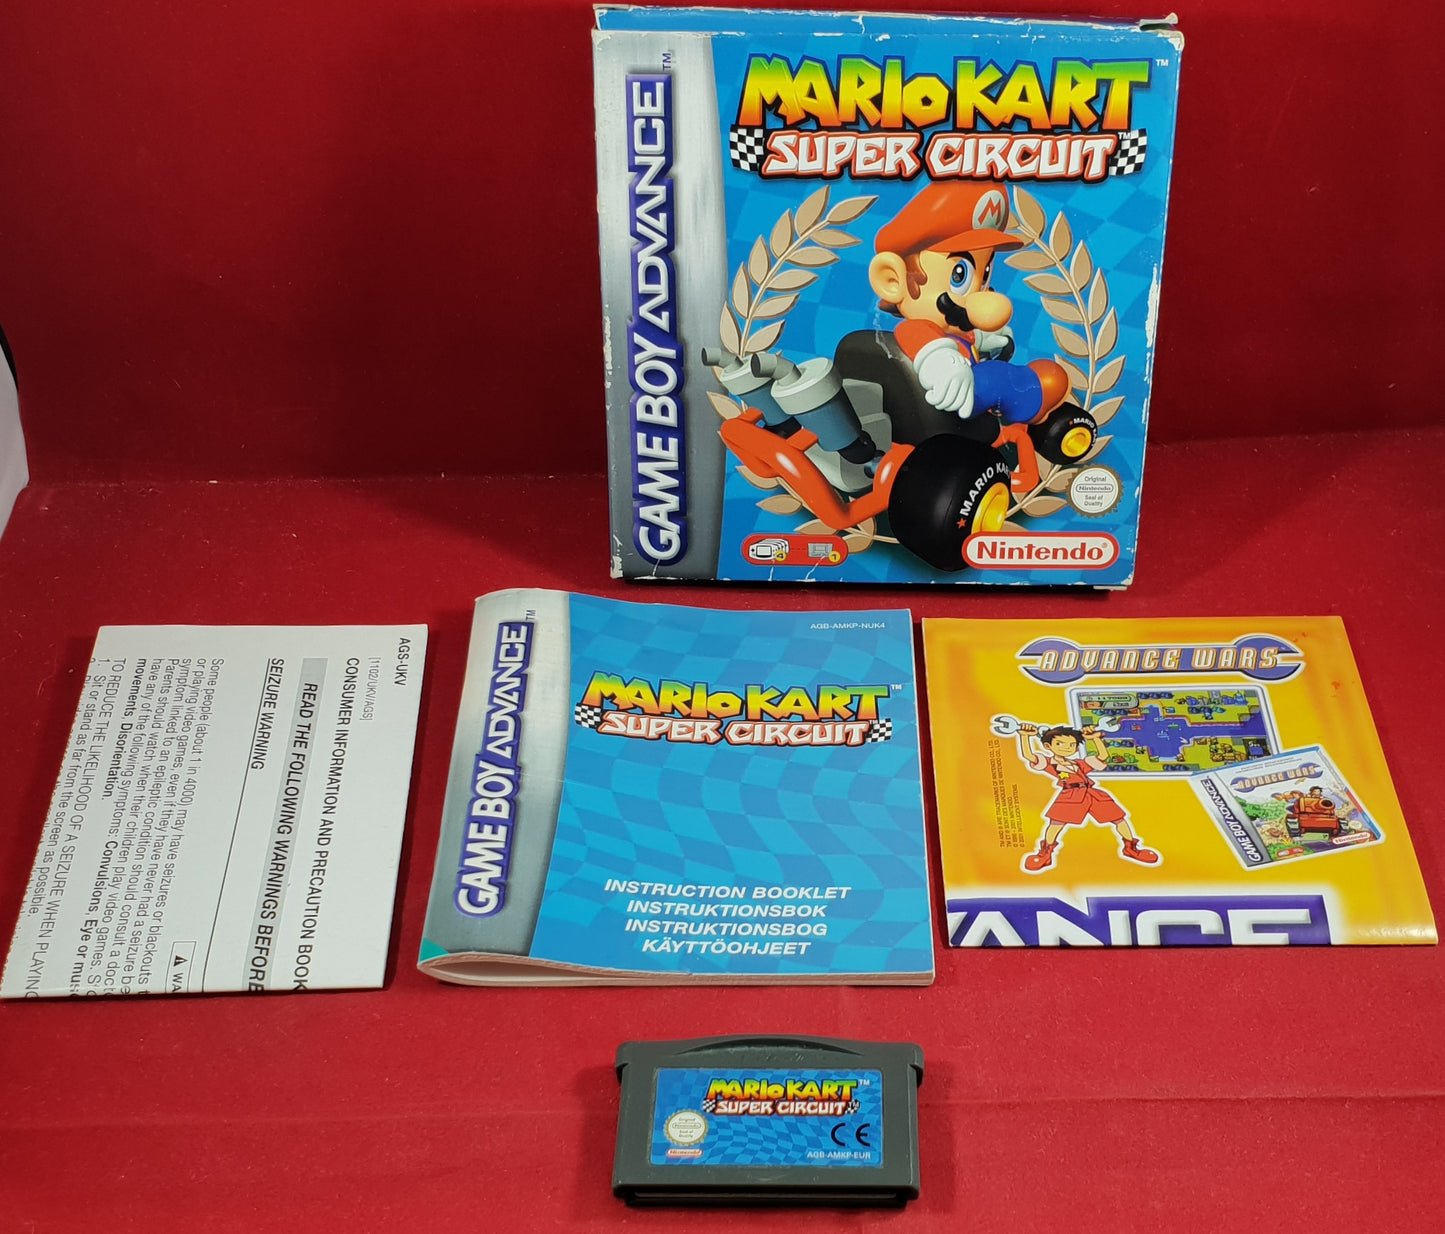 Mario Kart Super Circuit (Gameboy Advance) boxed game